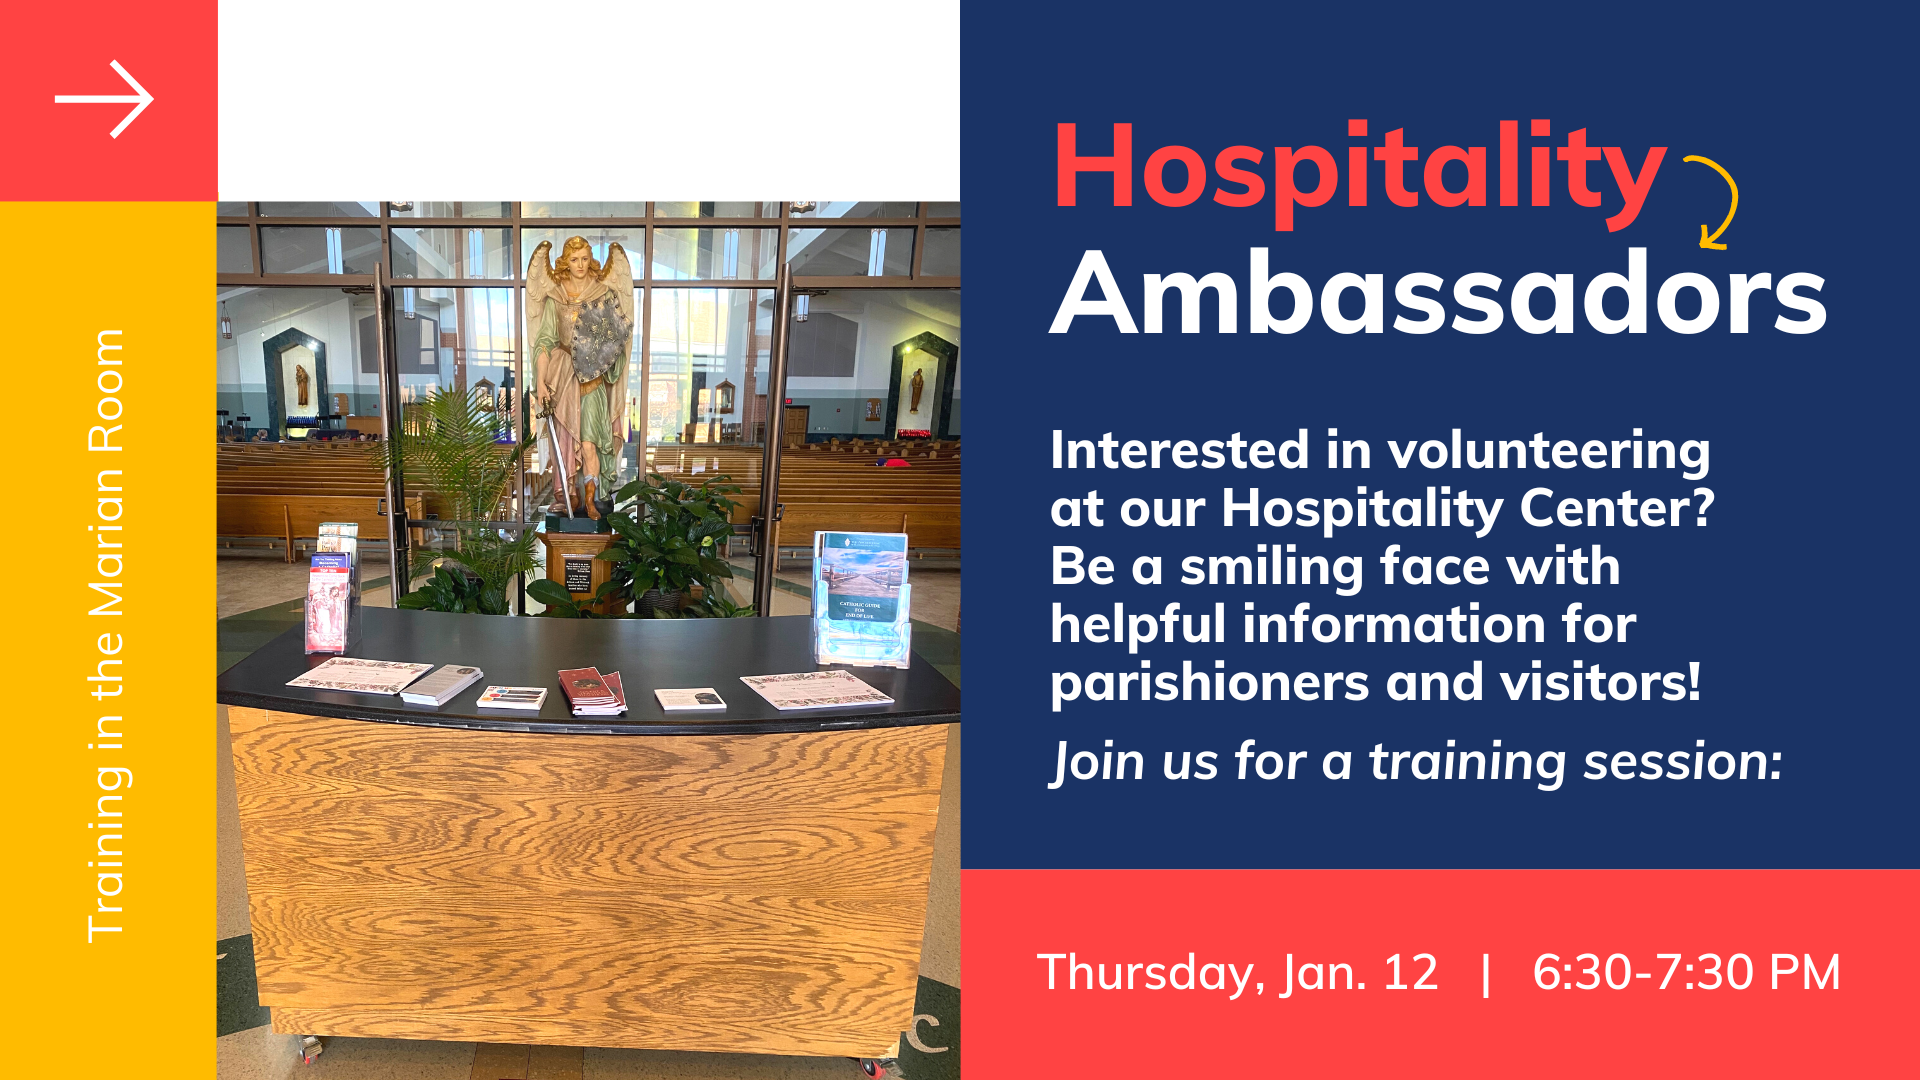 Hospitality Ambassador Training, Thursday January 12, 6:30-7:30 PM